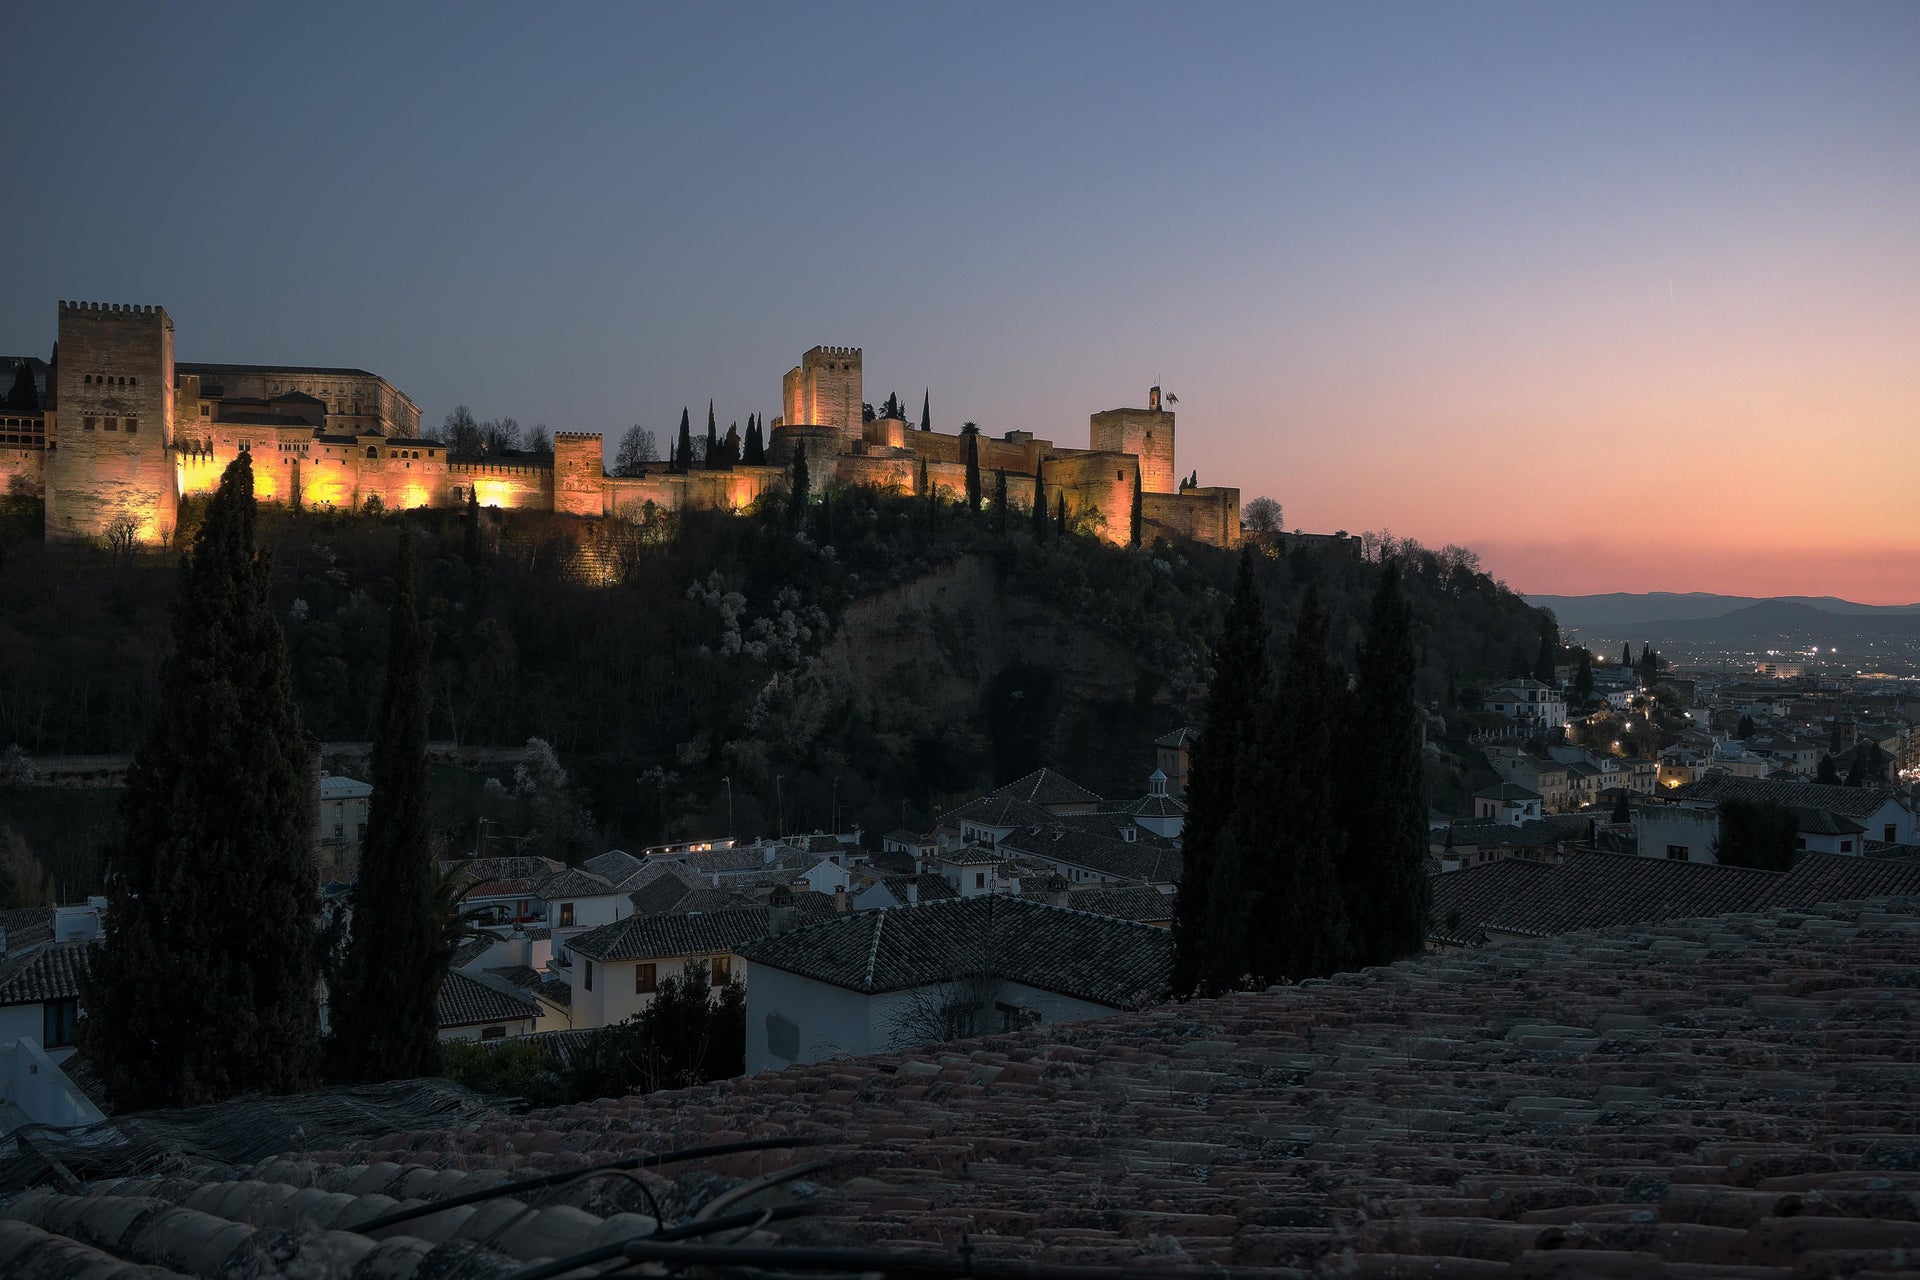 Tour de mistérios e lendas por Granada